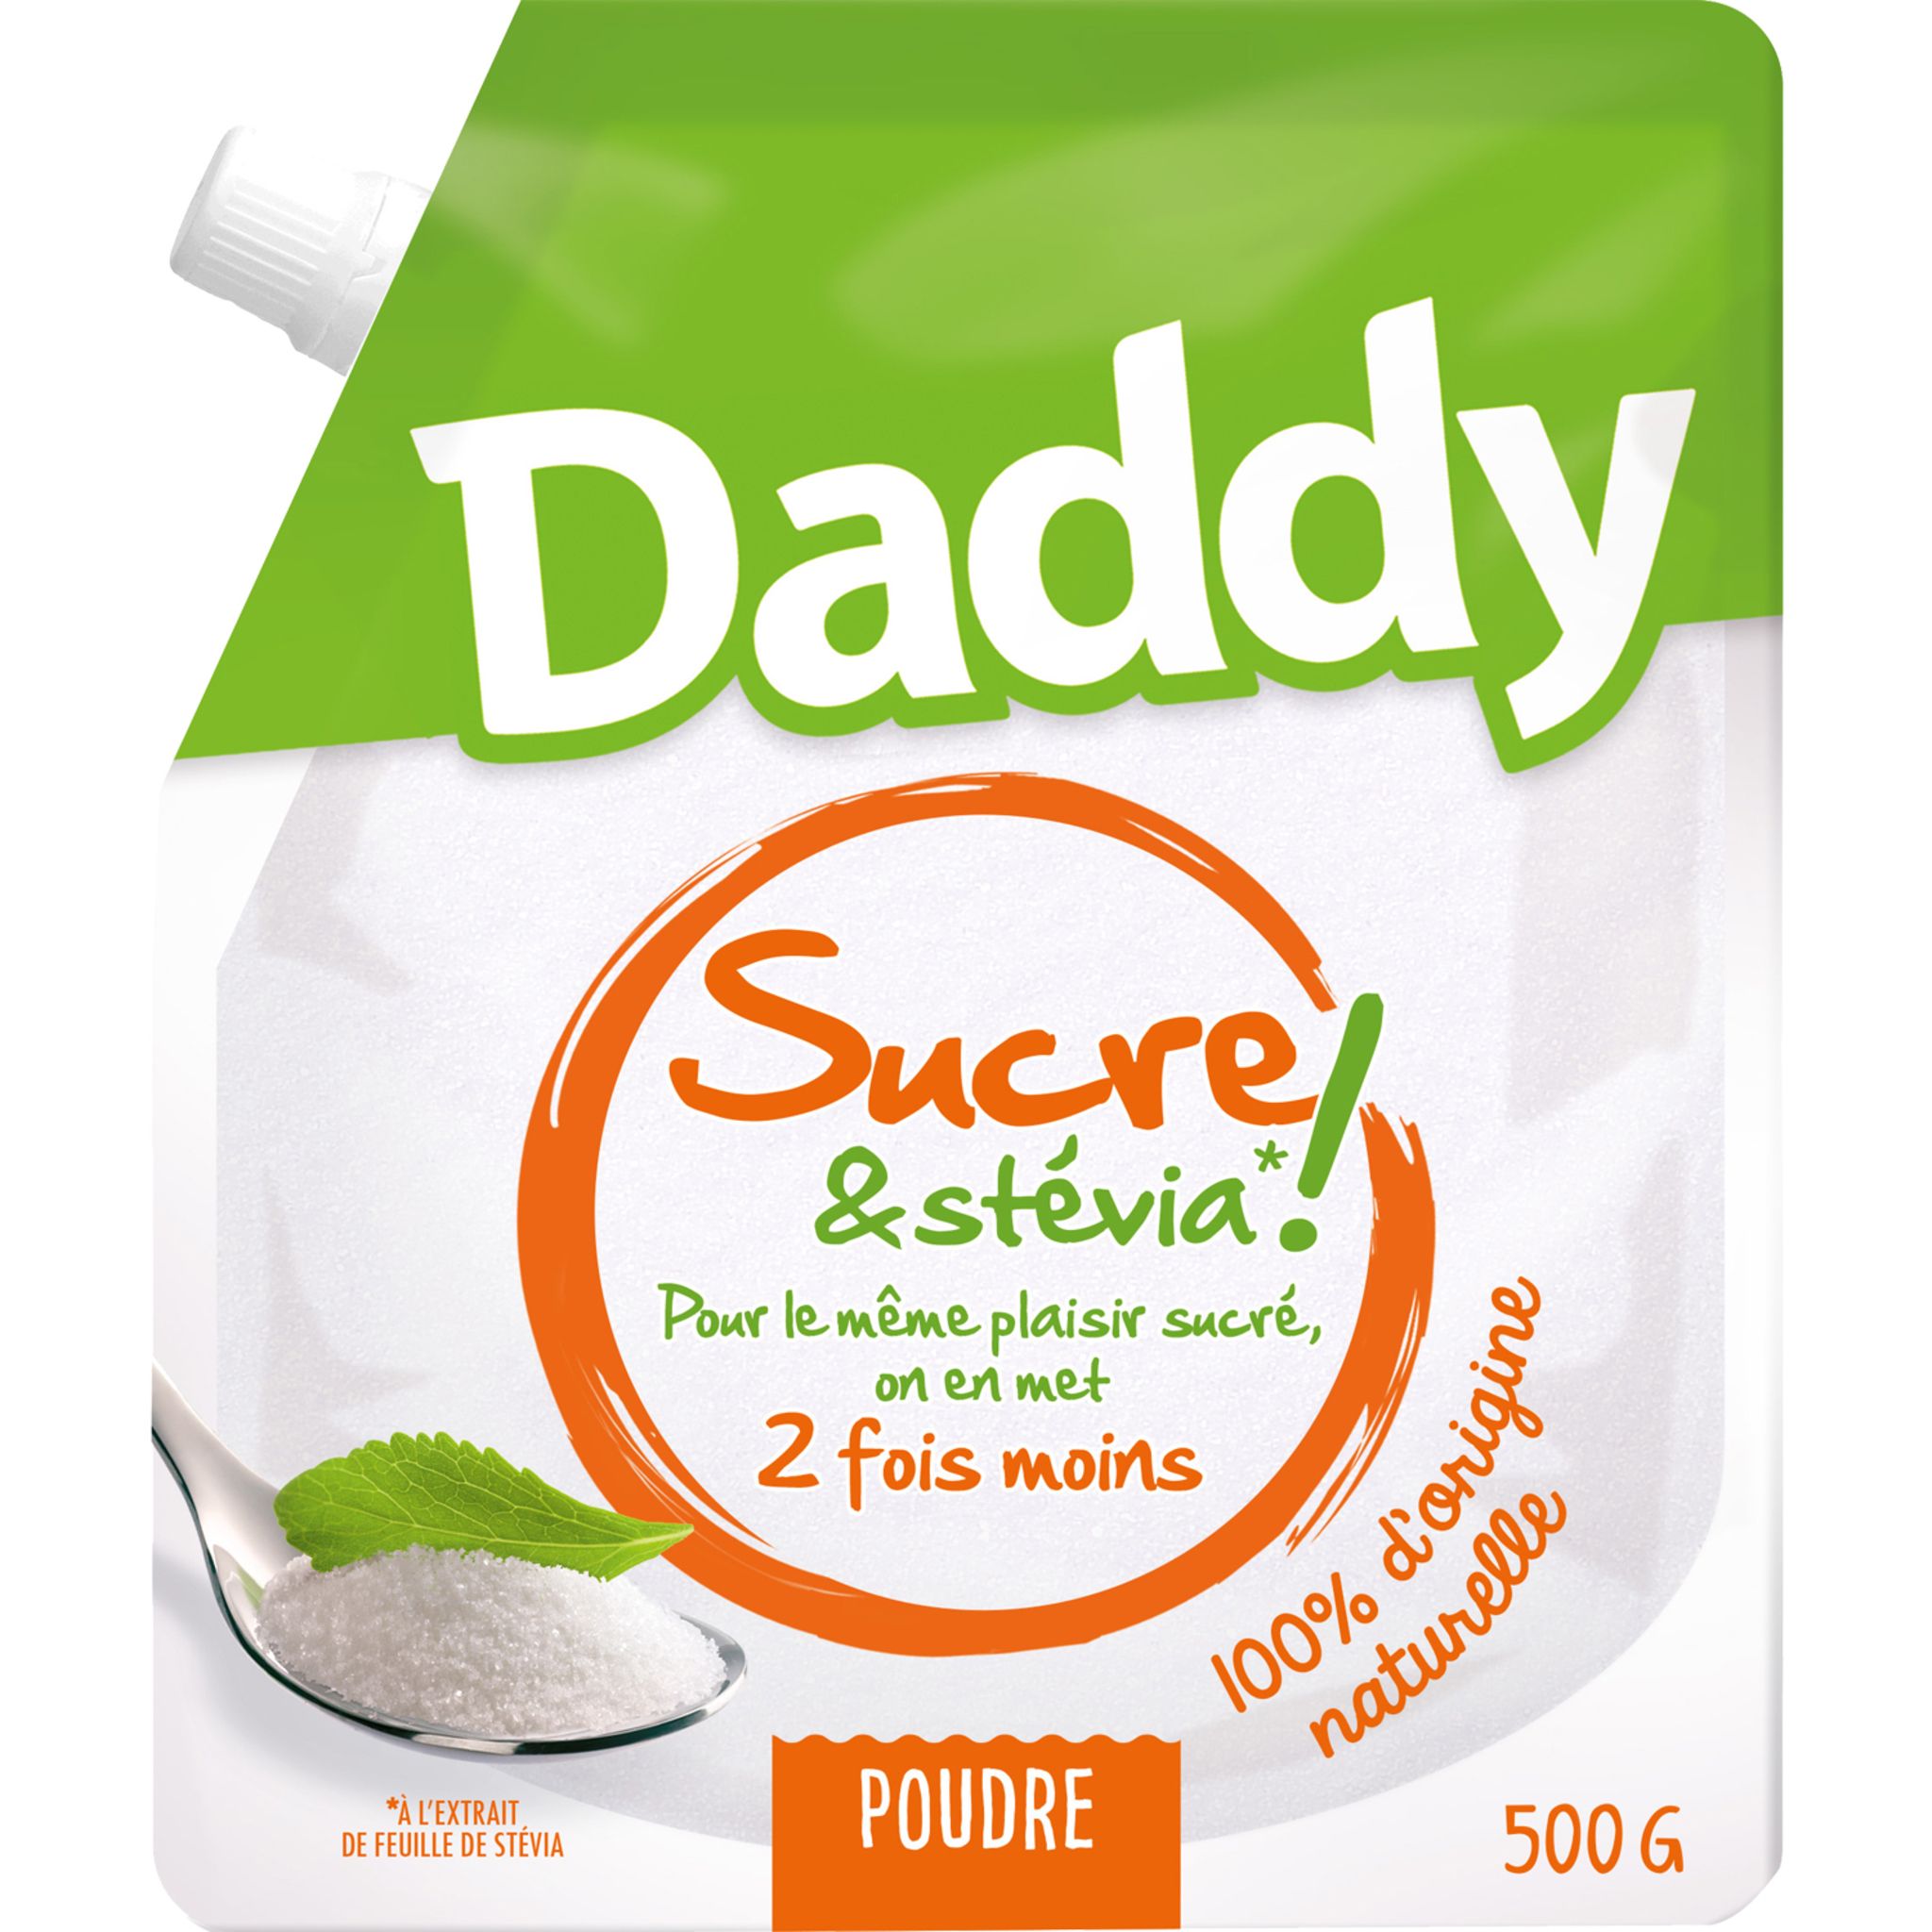 DADDY Daddy sucre stévia 500g pas cher 